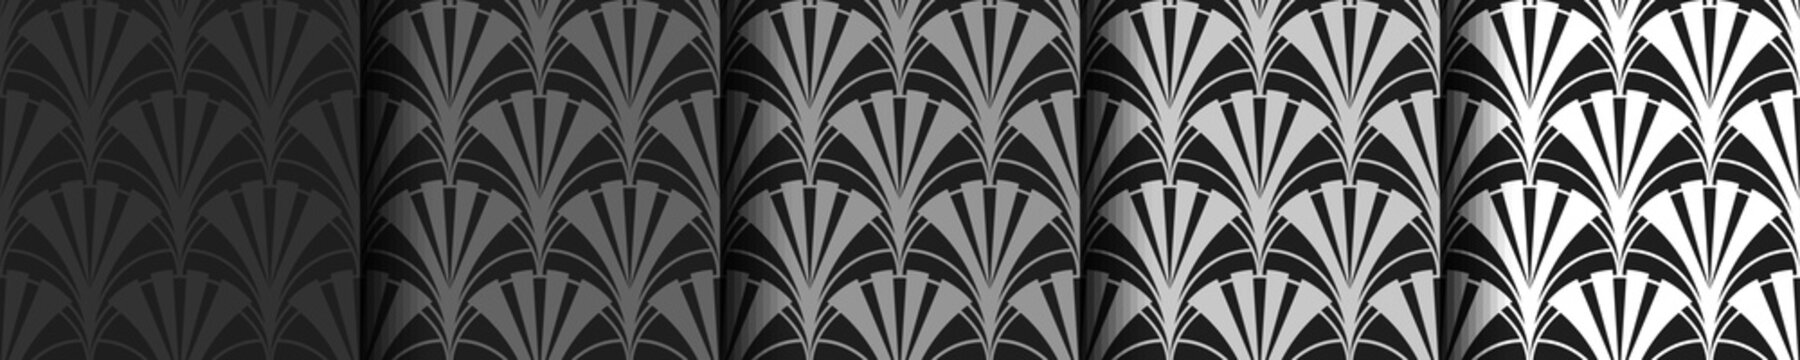 Art Deco Patterns Set. Grey and white backgrounds. Fan scales ornaments. Geometric decorative digital papers. Vector retro design. 1920-30s motifs. Luxury vintage illustration